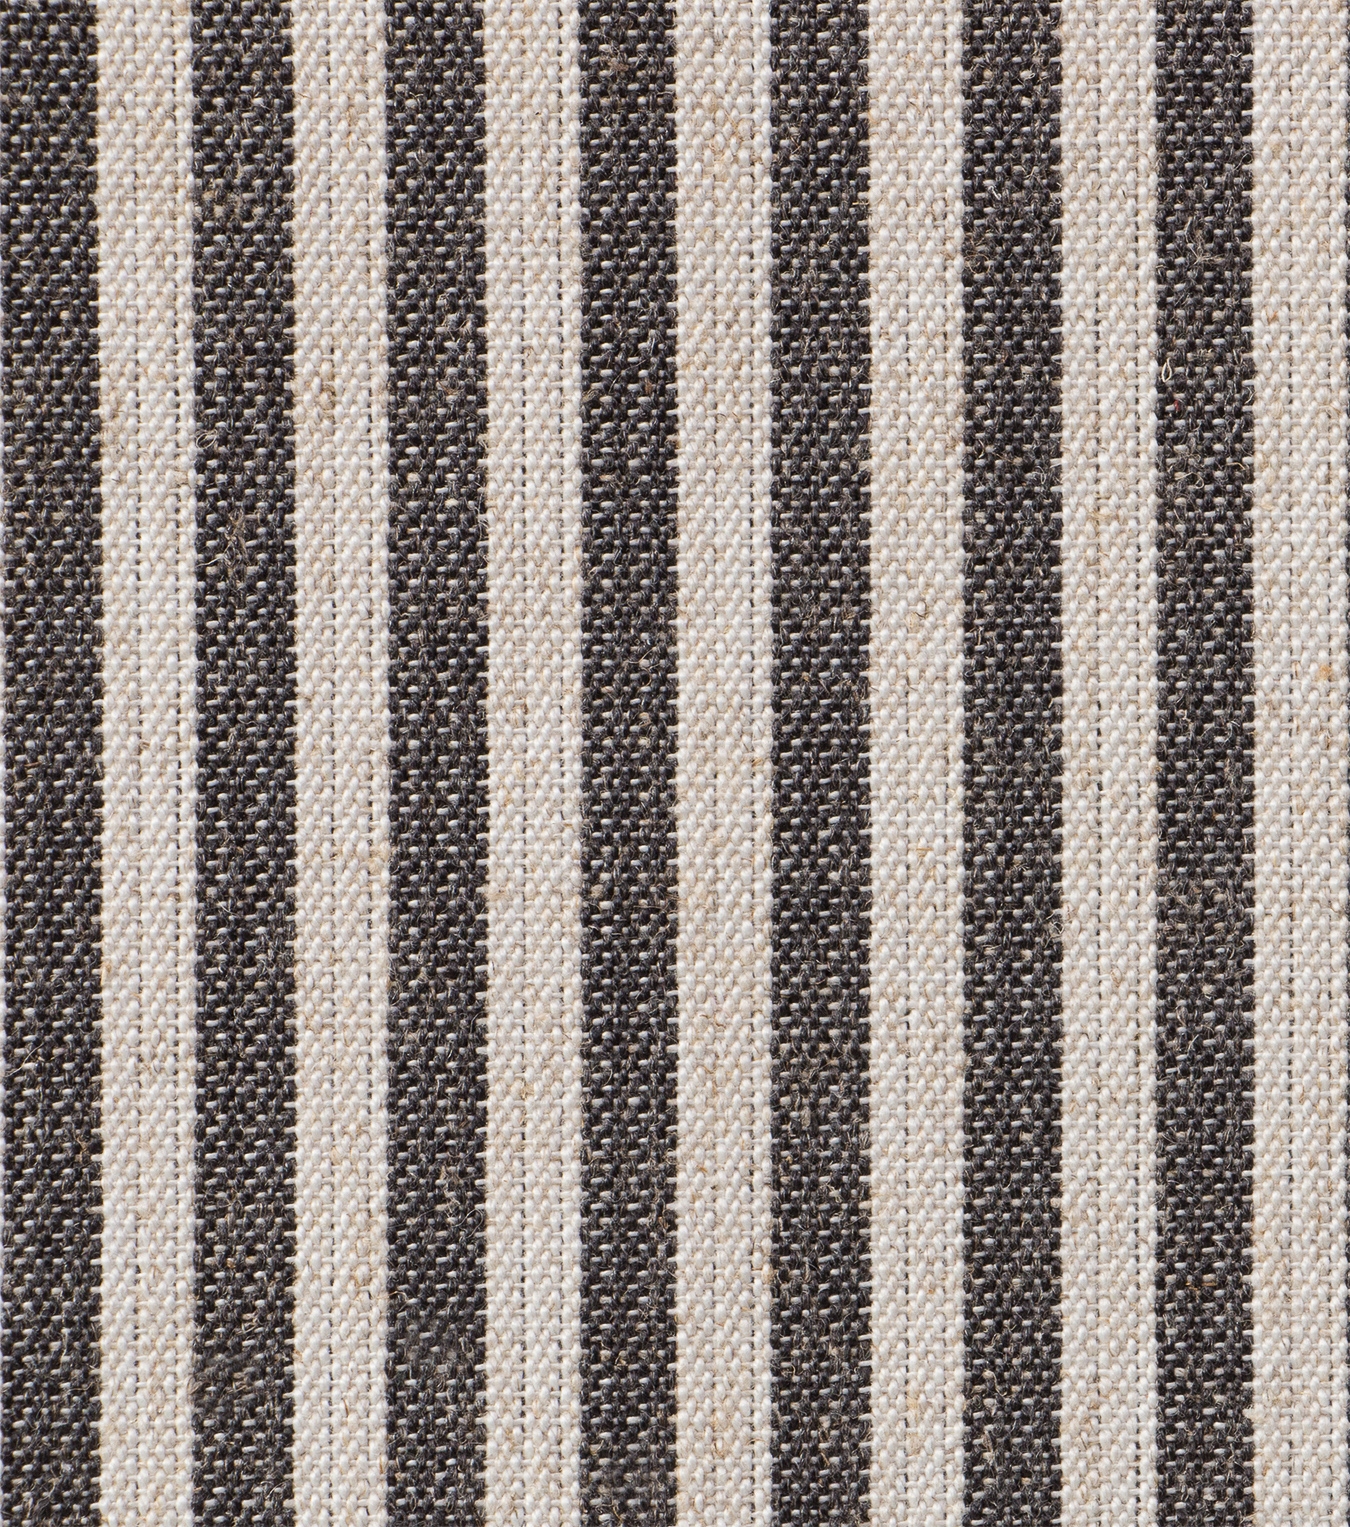 Vyolet Ottoman, Charcoal Stripe - Image 2